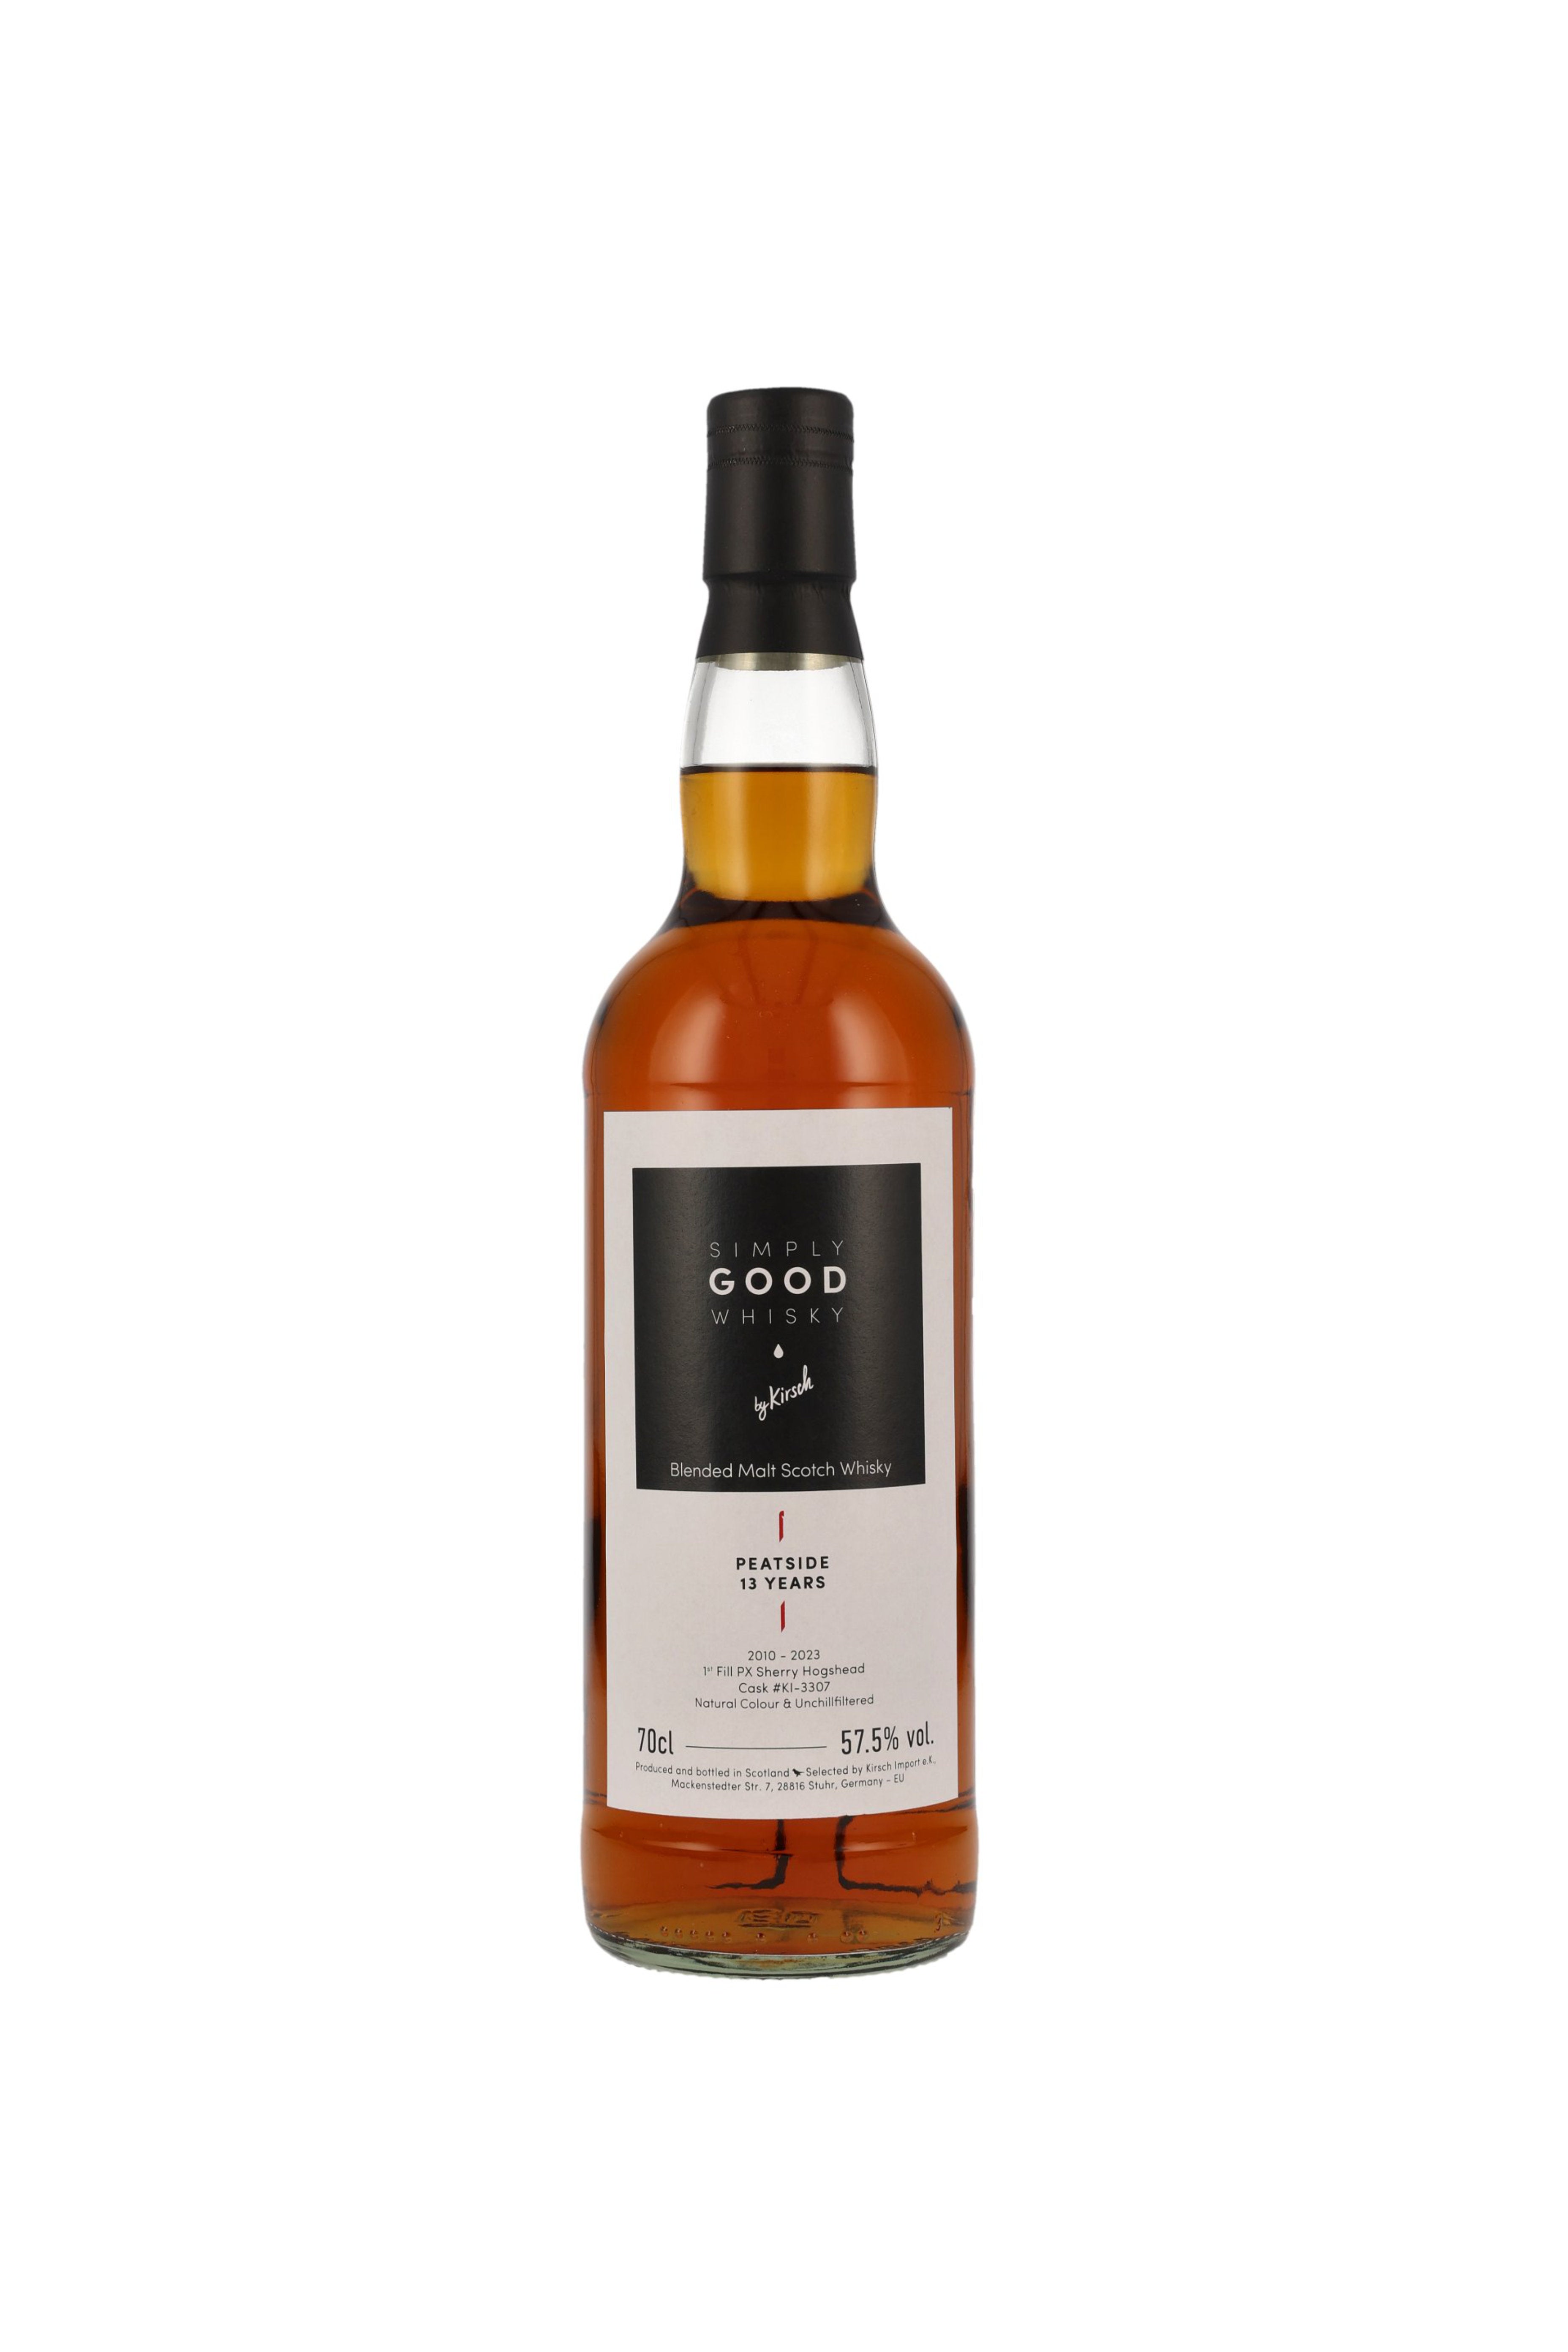 Peatside Simple Good Whisky 13 Jahre Blended PX Sherry Hogshead 57,5% vol. 700ml